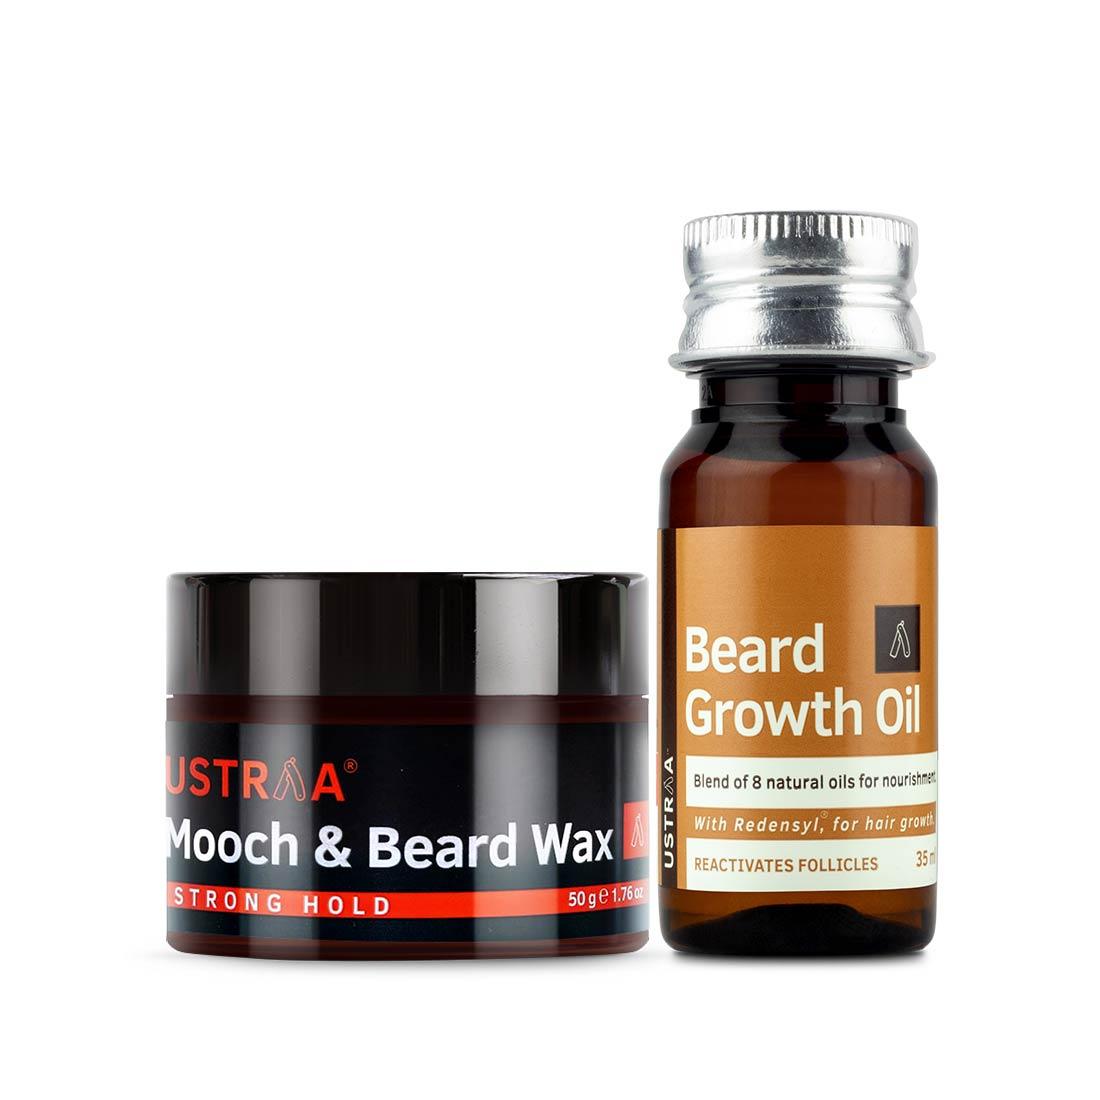 Beard Growth Oil and Beard & Mooch Styling Wax